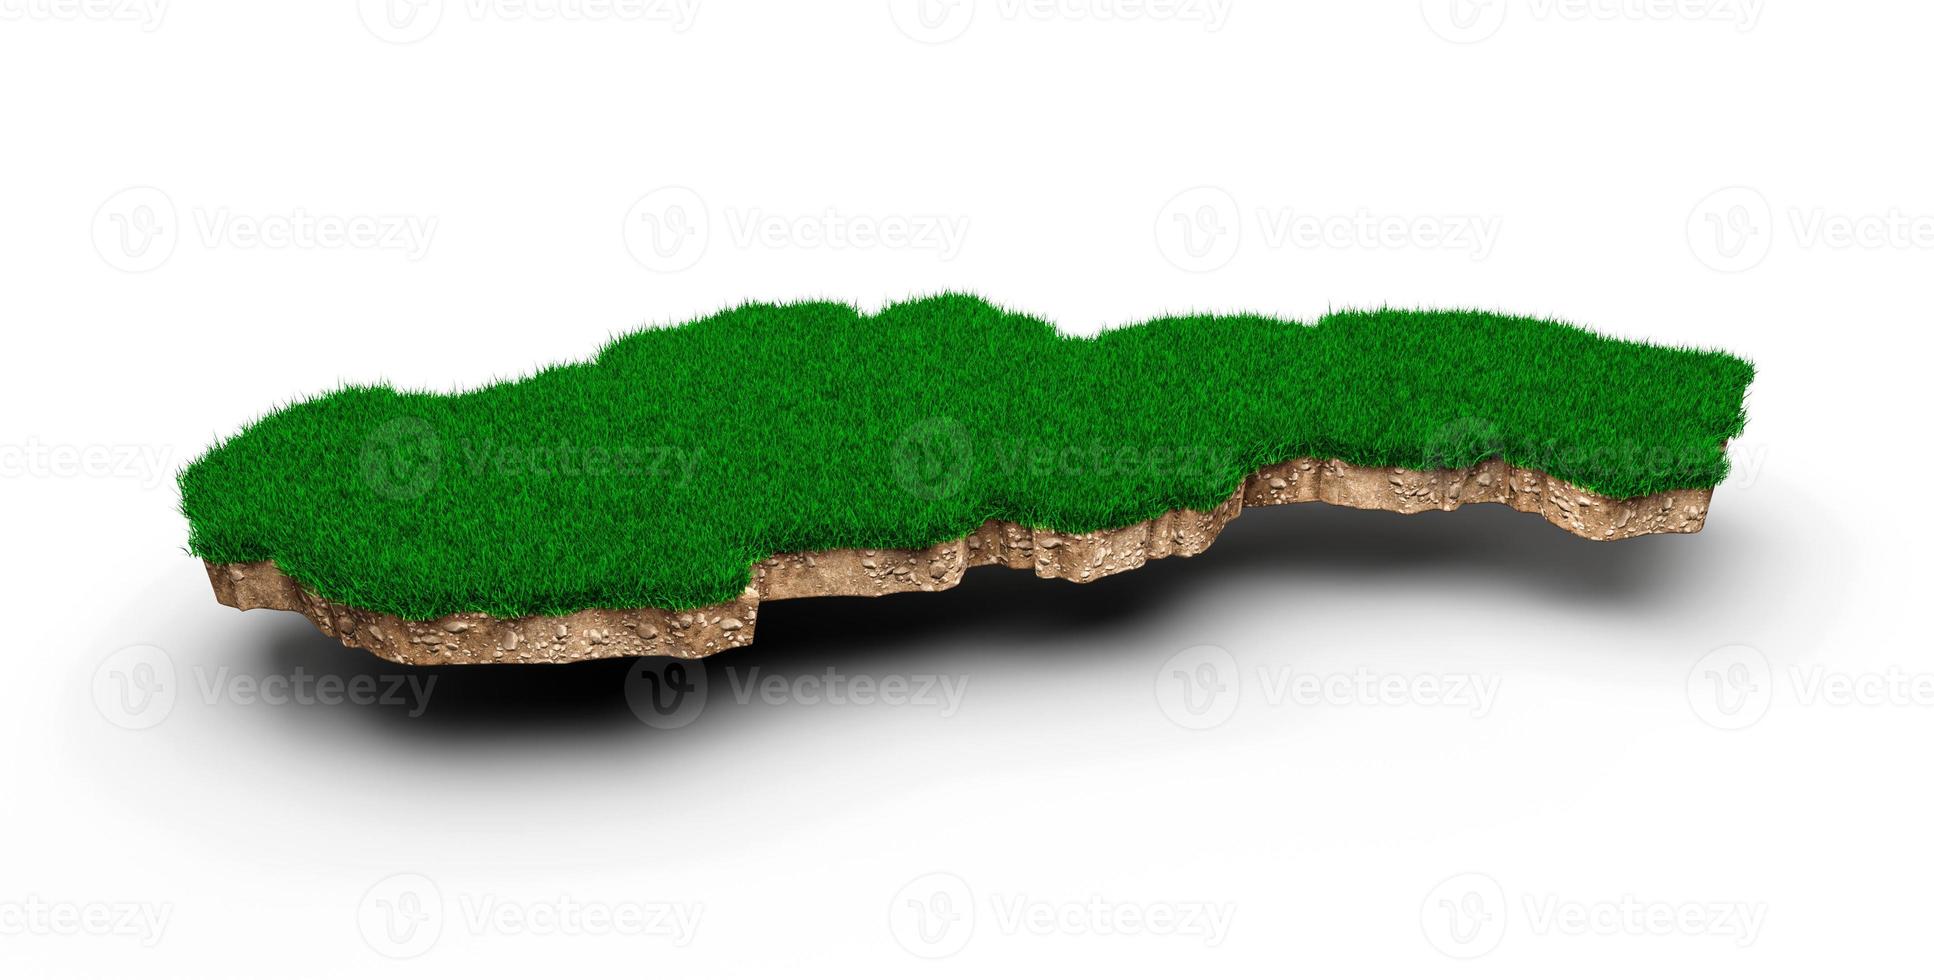 slowakei karte boden land geologie querschnitt mit grünem gras und felsen bodentextur 3d illustration foto